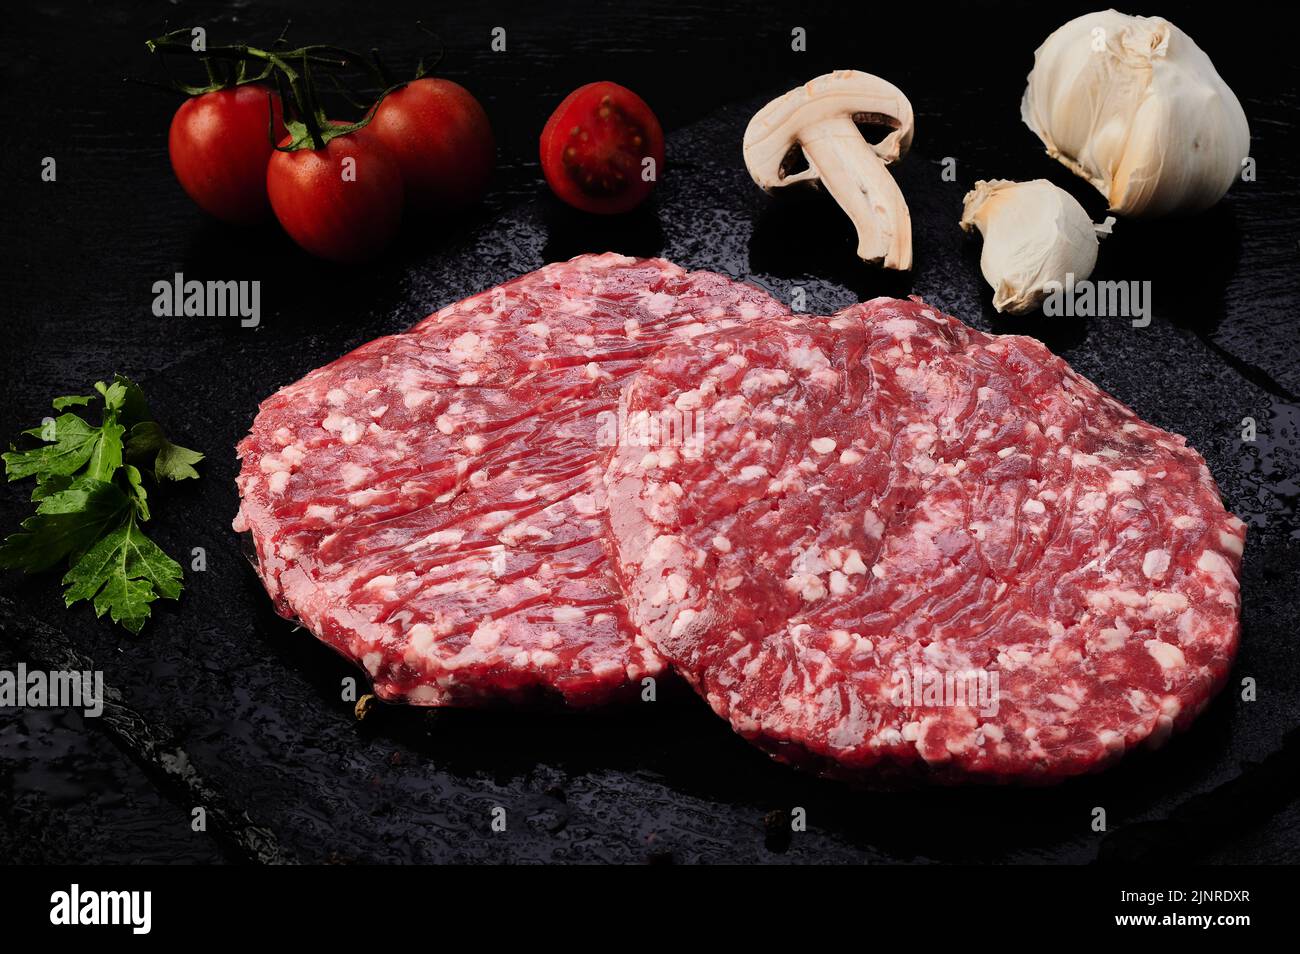 Raw burger, tomatoes, mushrooms and garlic Stock Photo